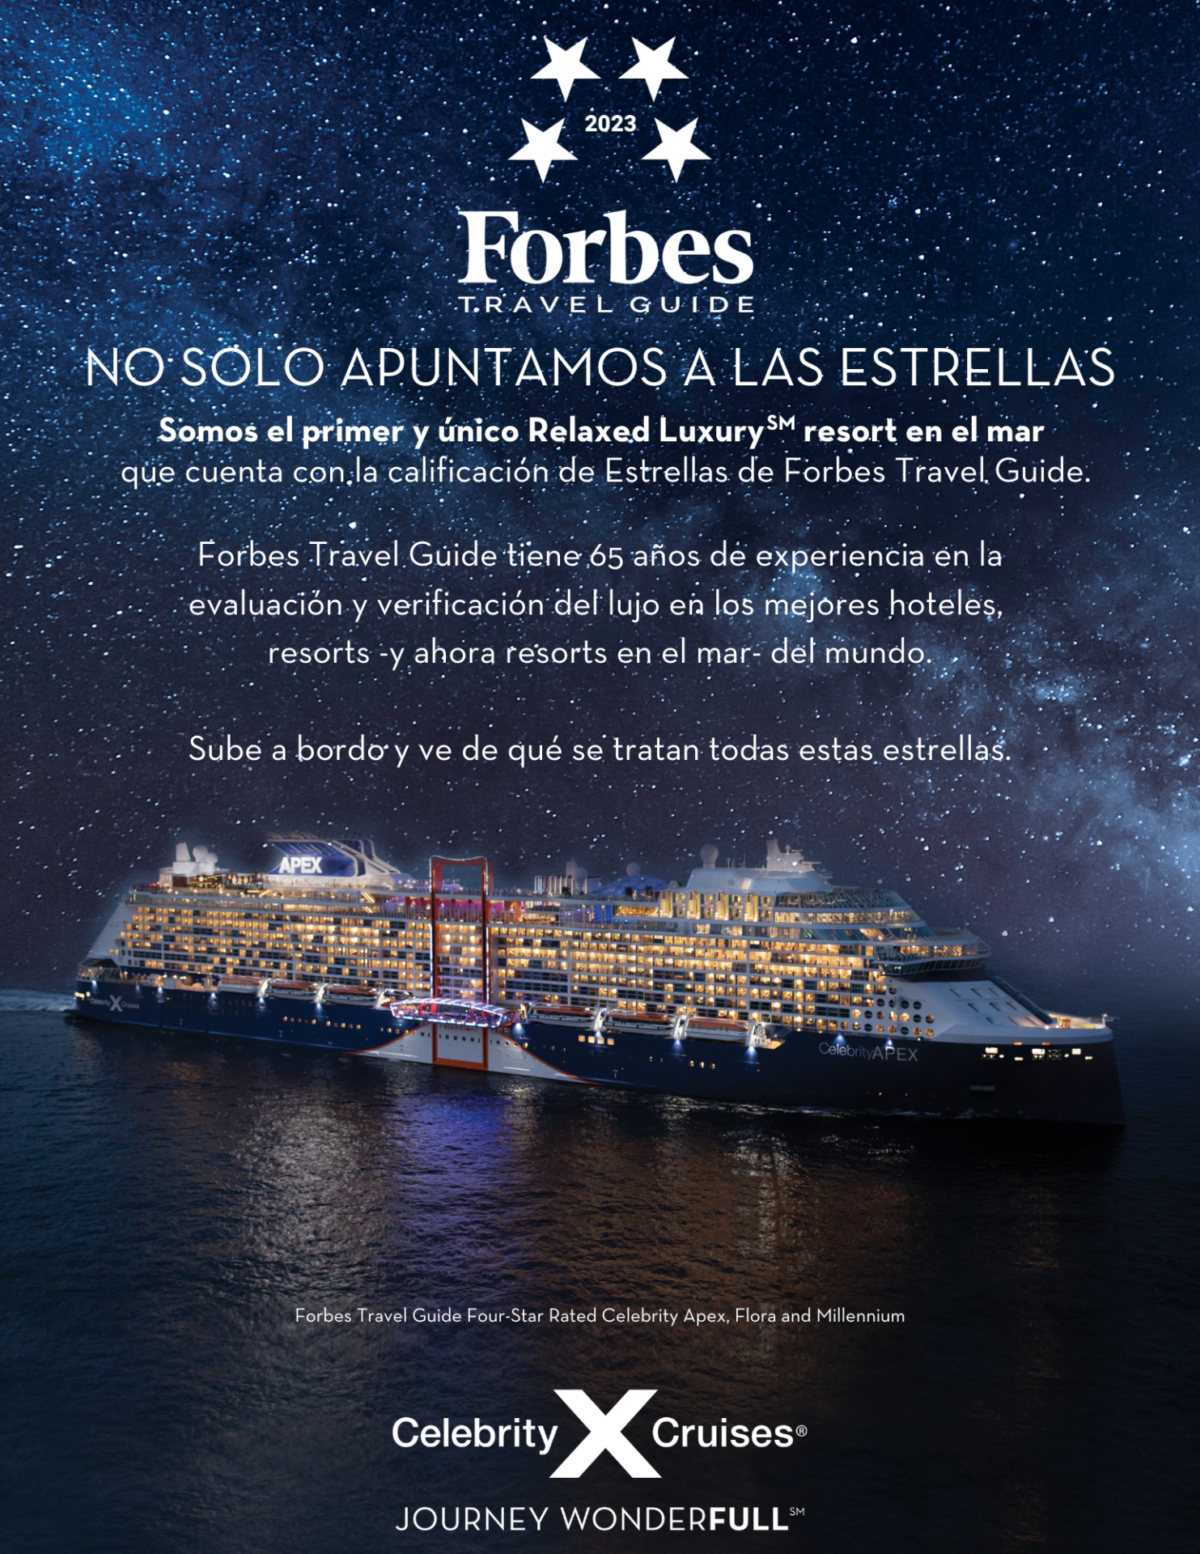 imagen del barco apex de Celebrity Cruises, Forbes Travel Guide 